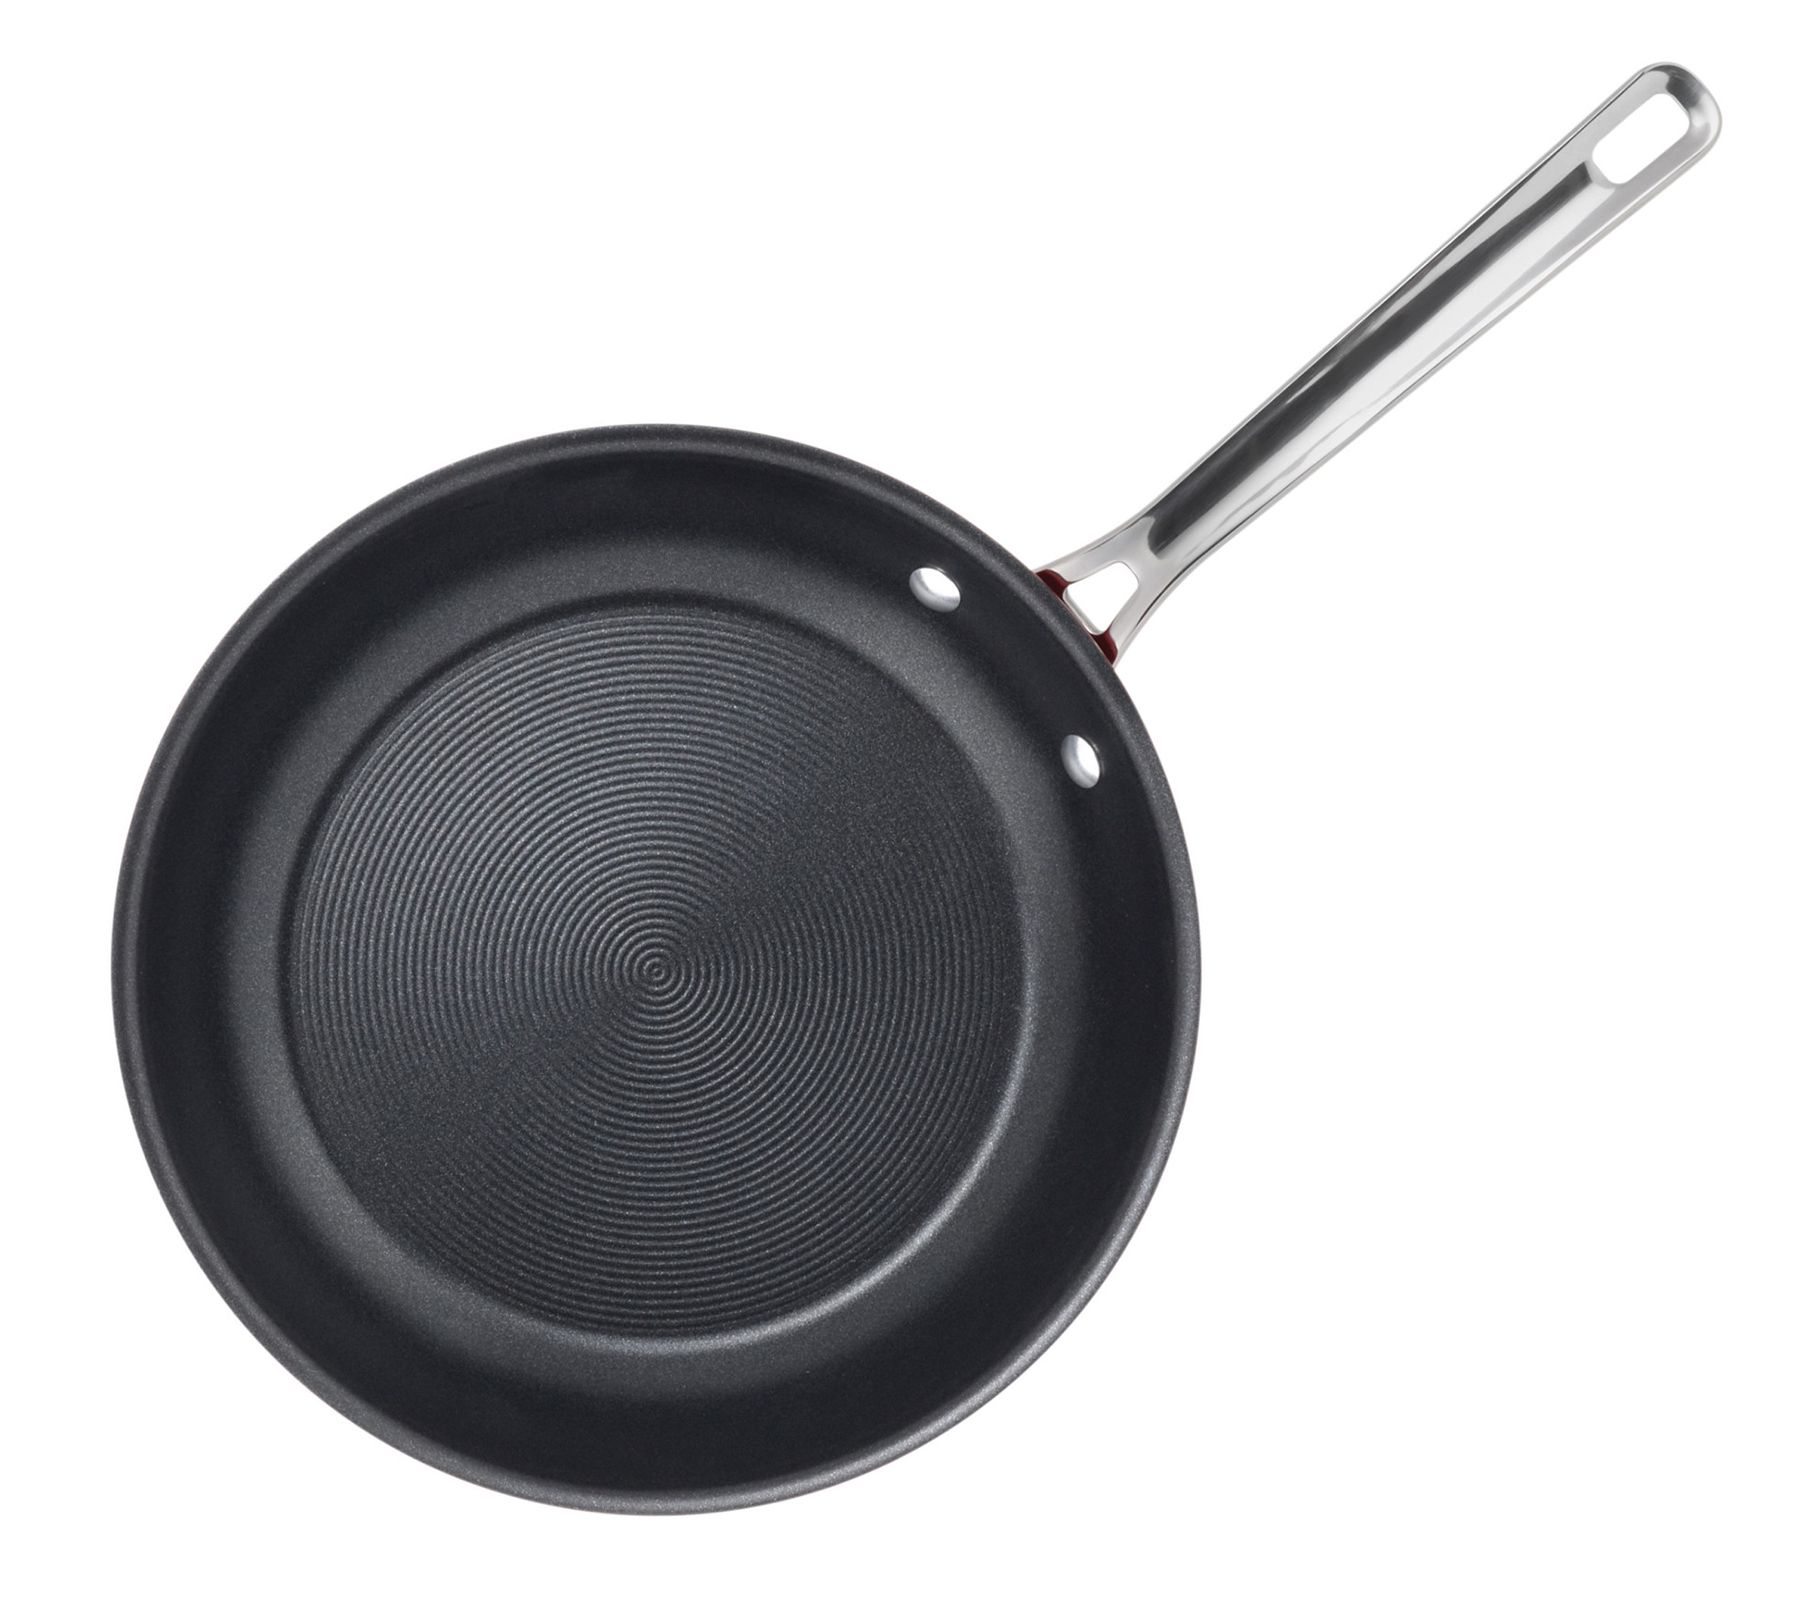 Circulon Genesis Stainless Steel Non-Stick 12-piece Cookware Set